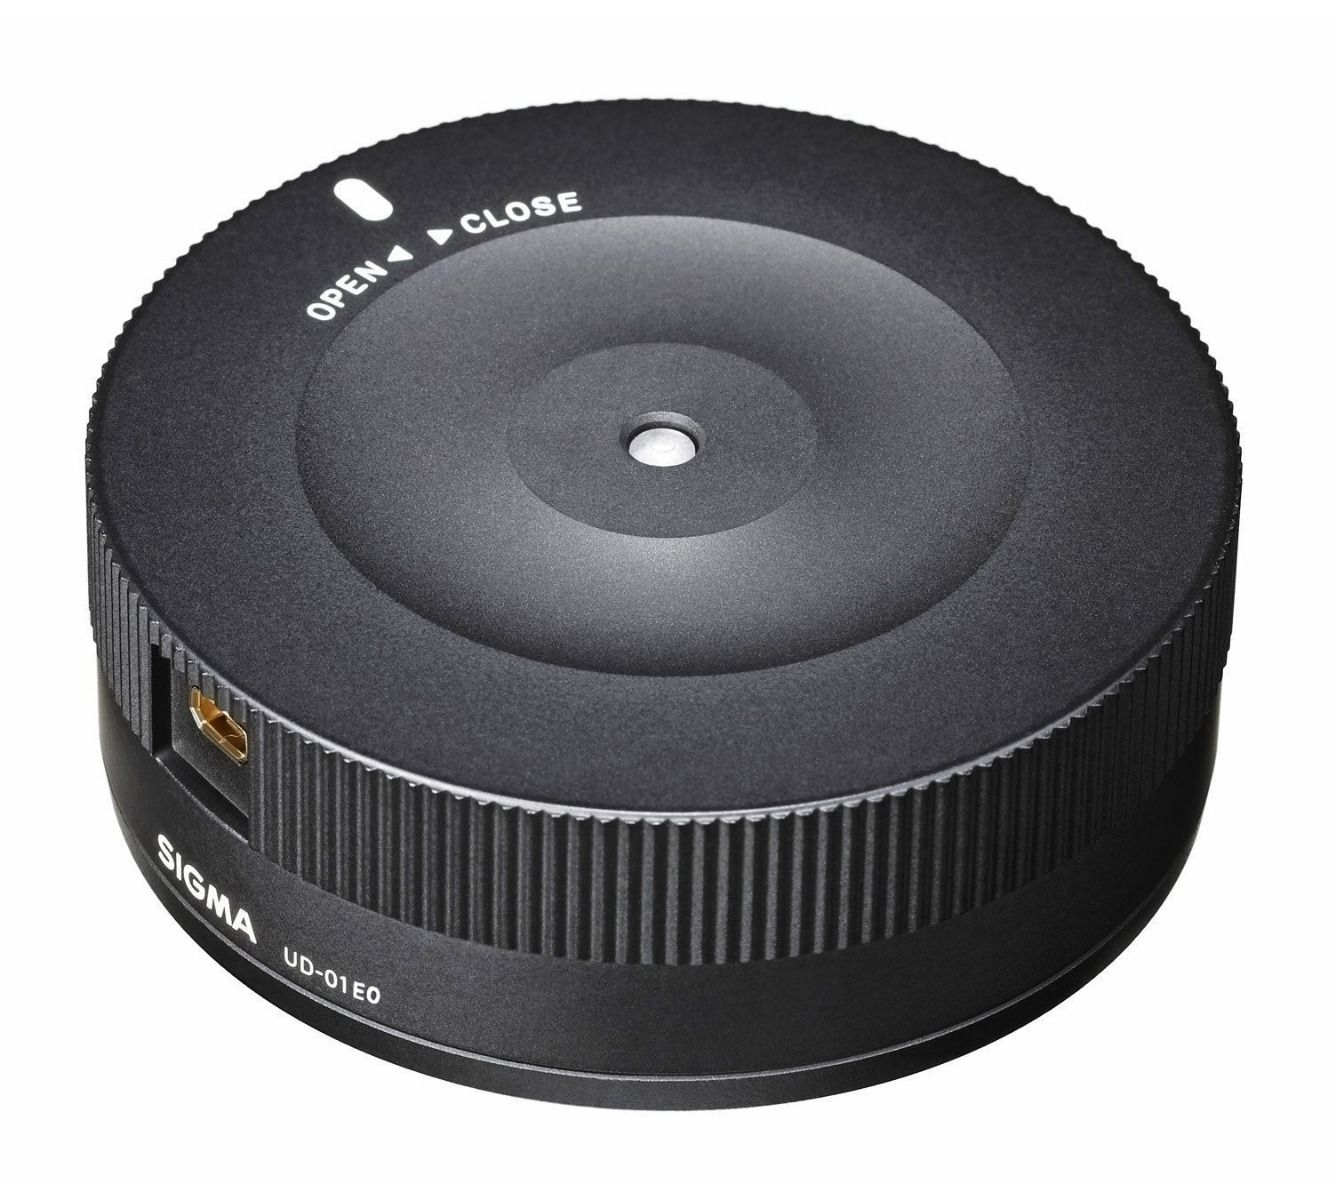 Sigma USB Dock for Canon Mount Lenses